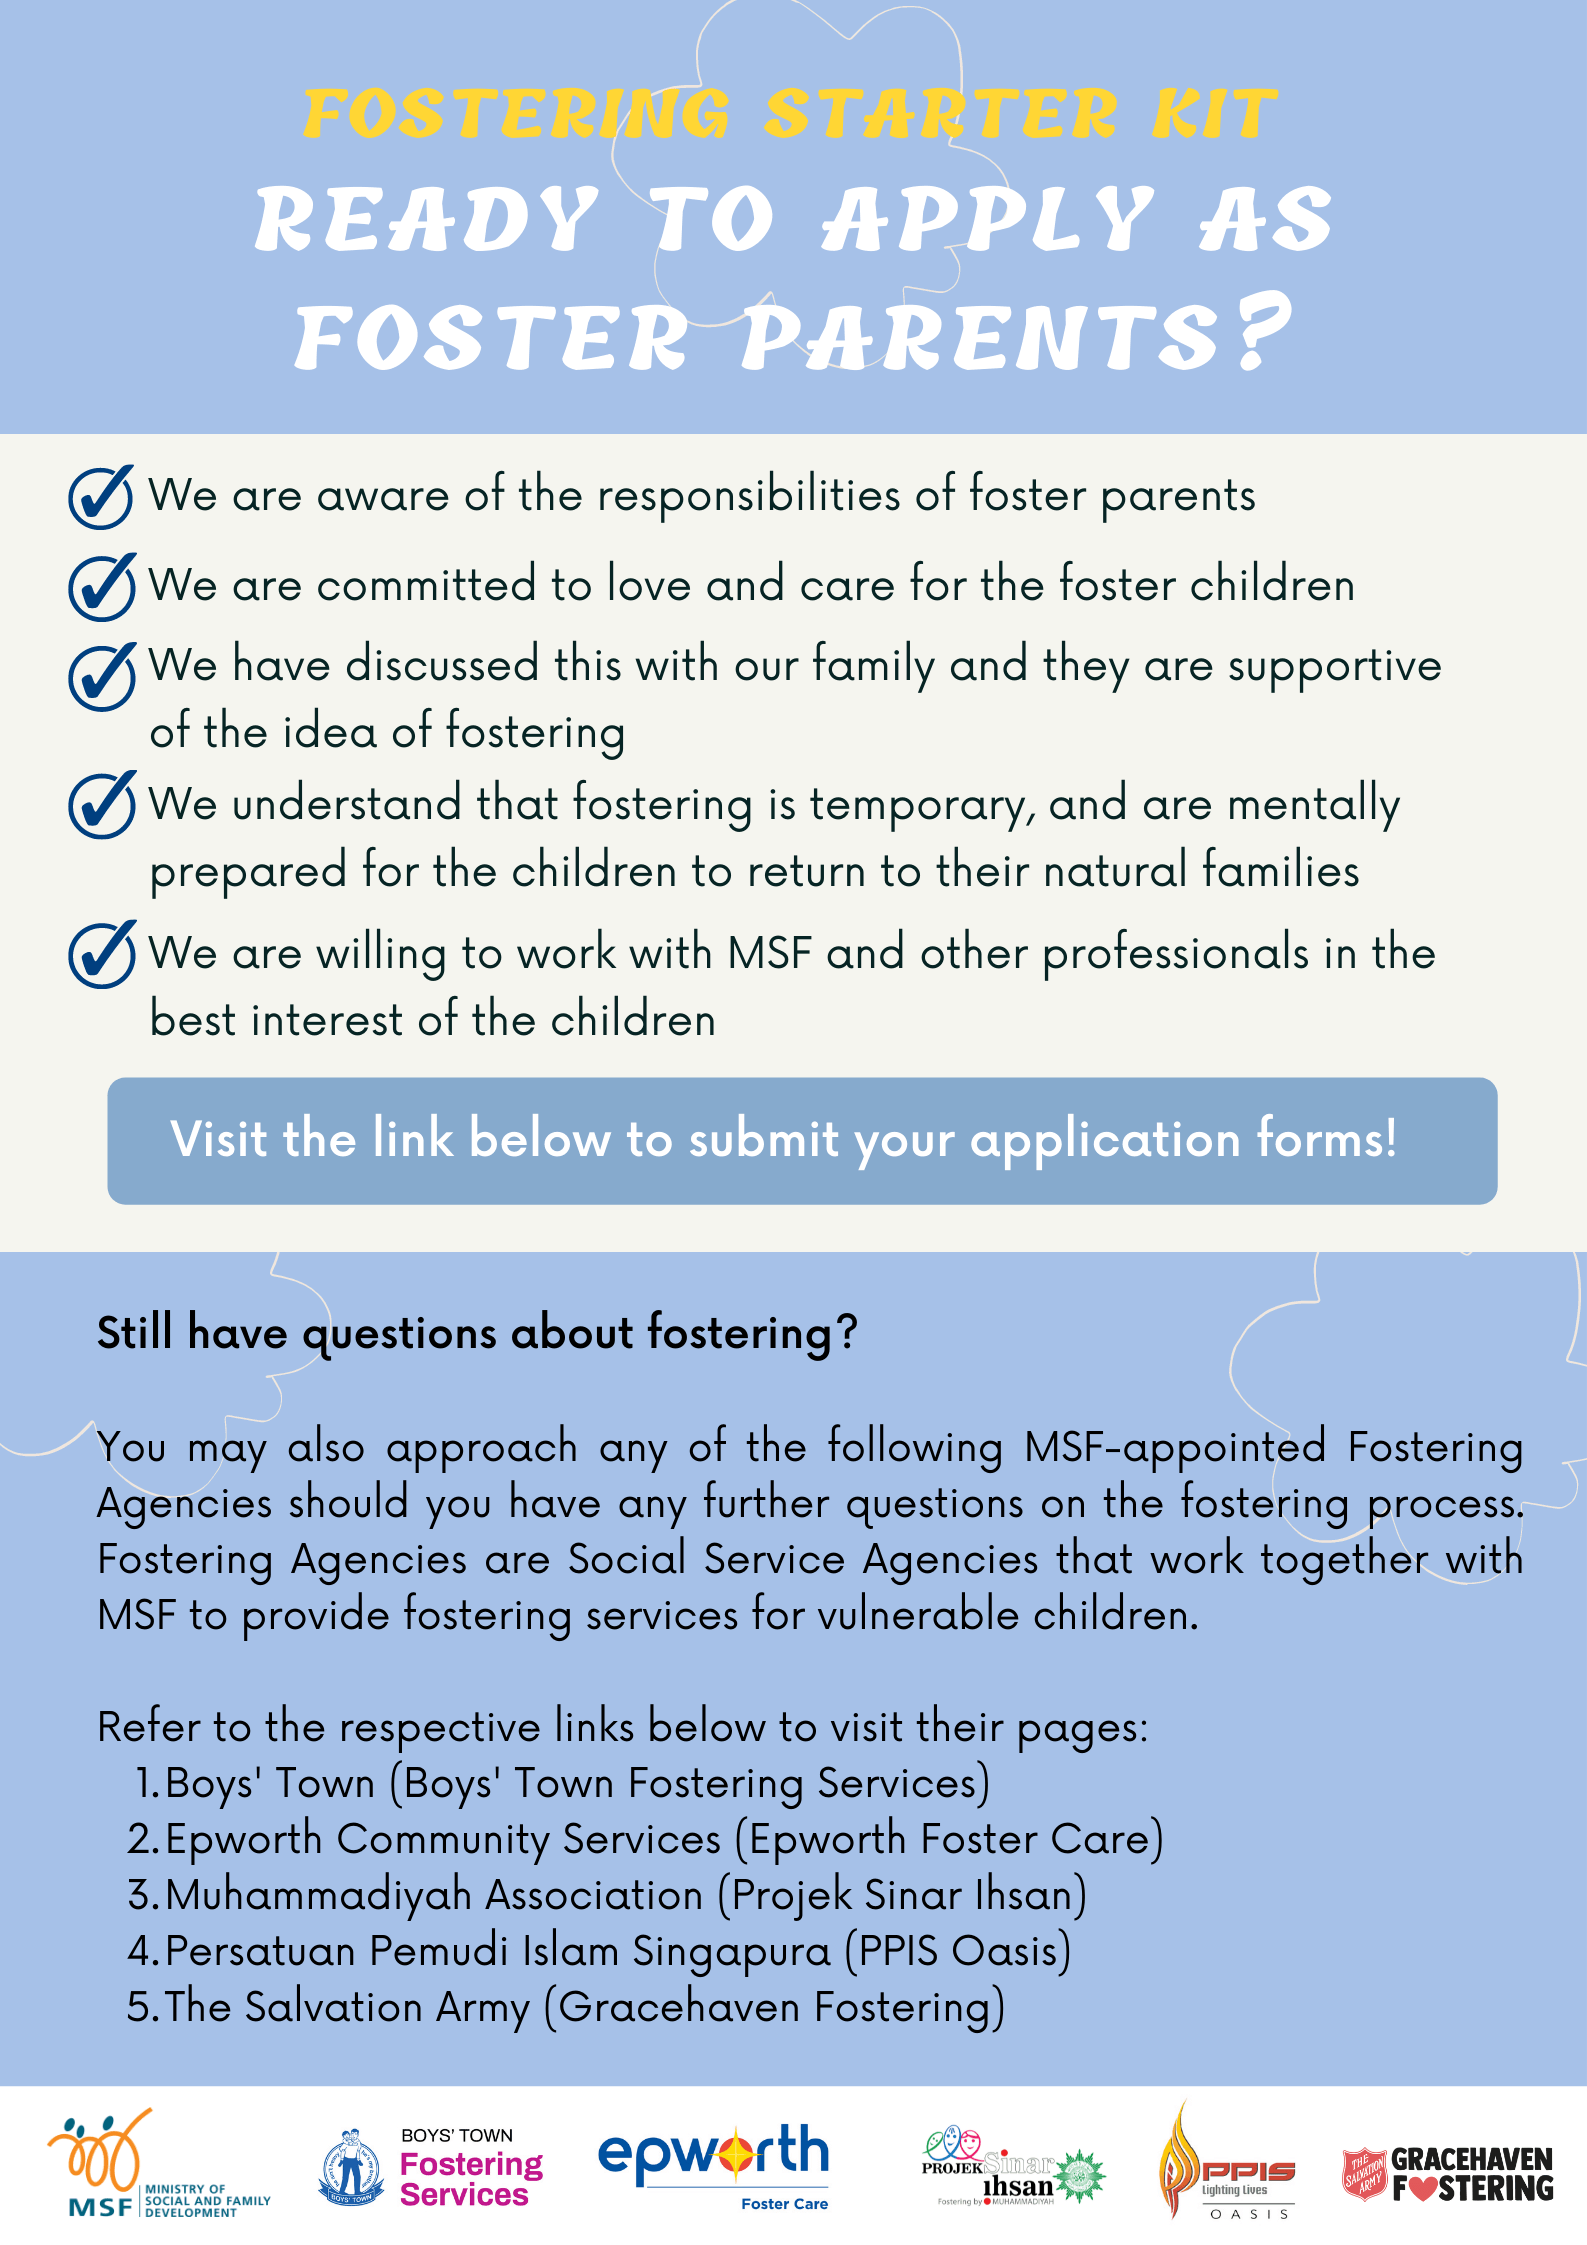 fostering starter kit image